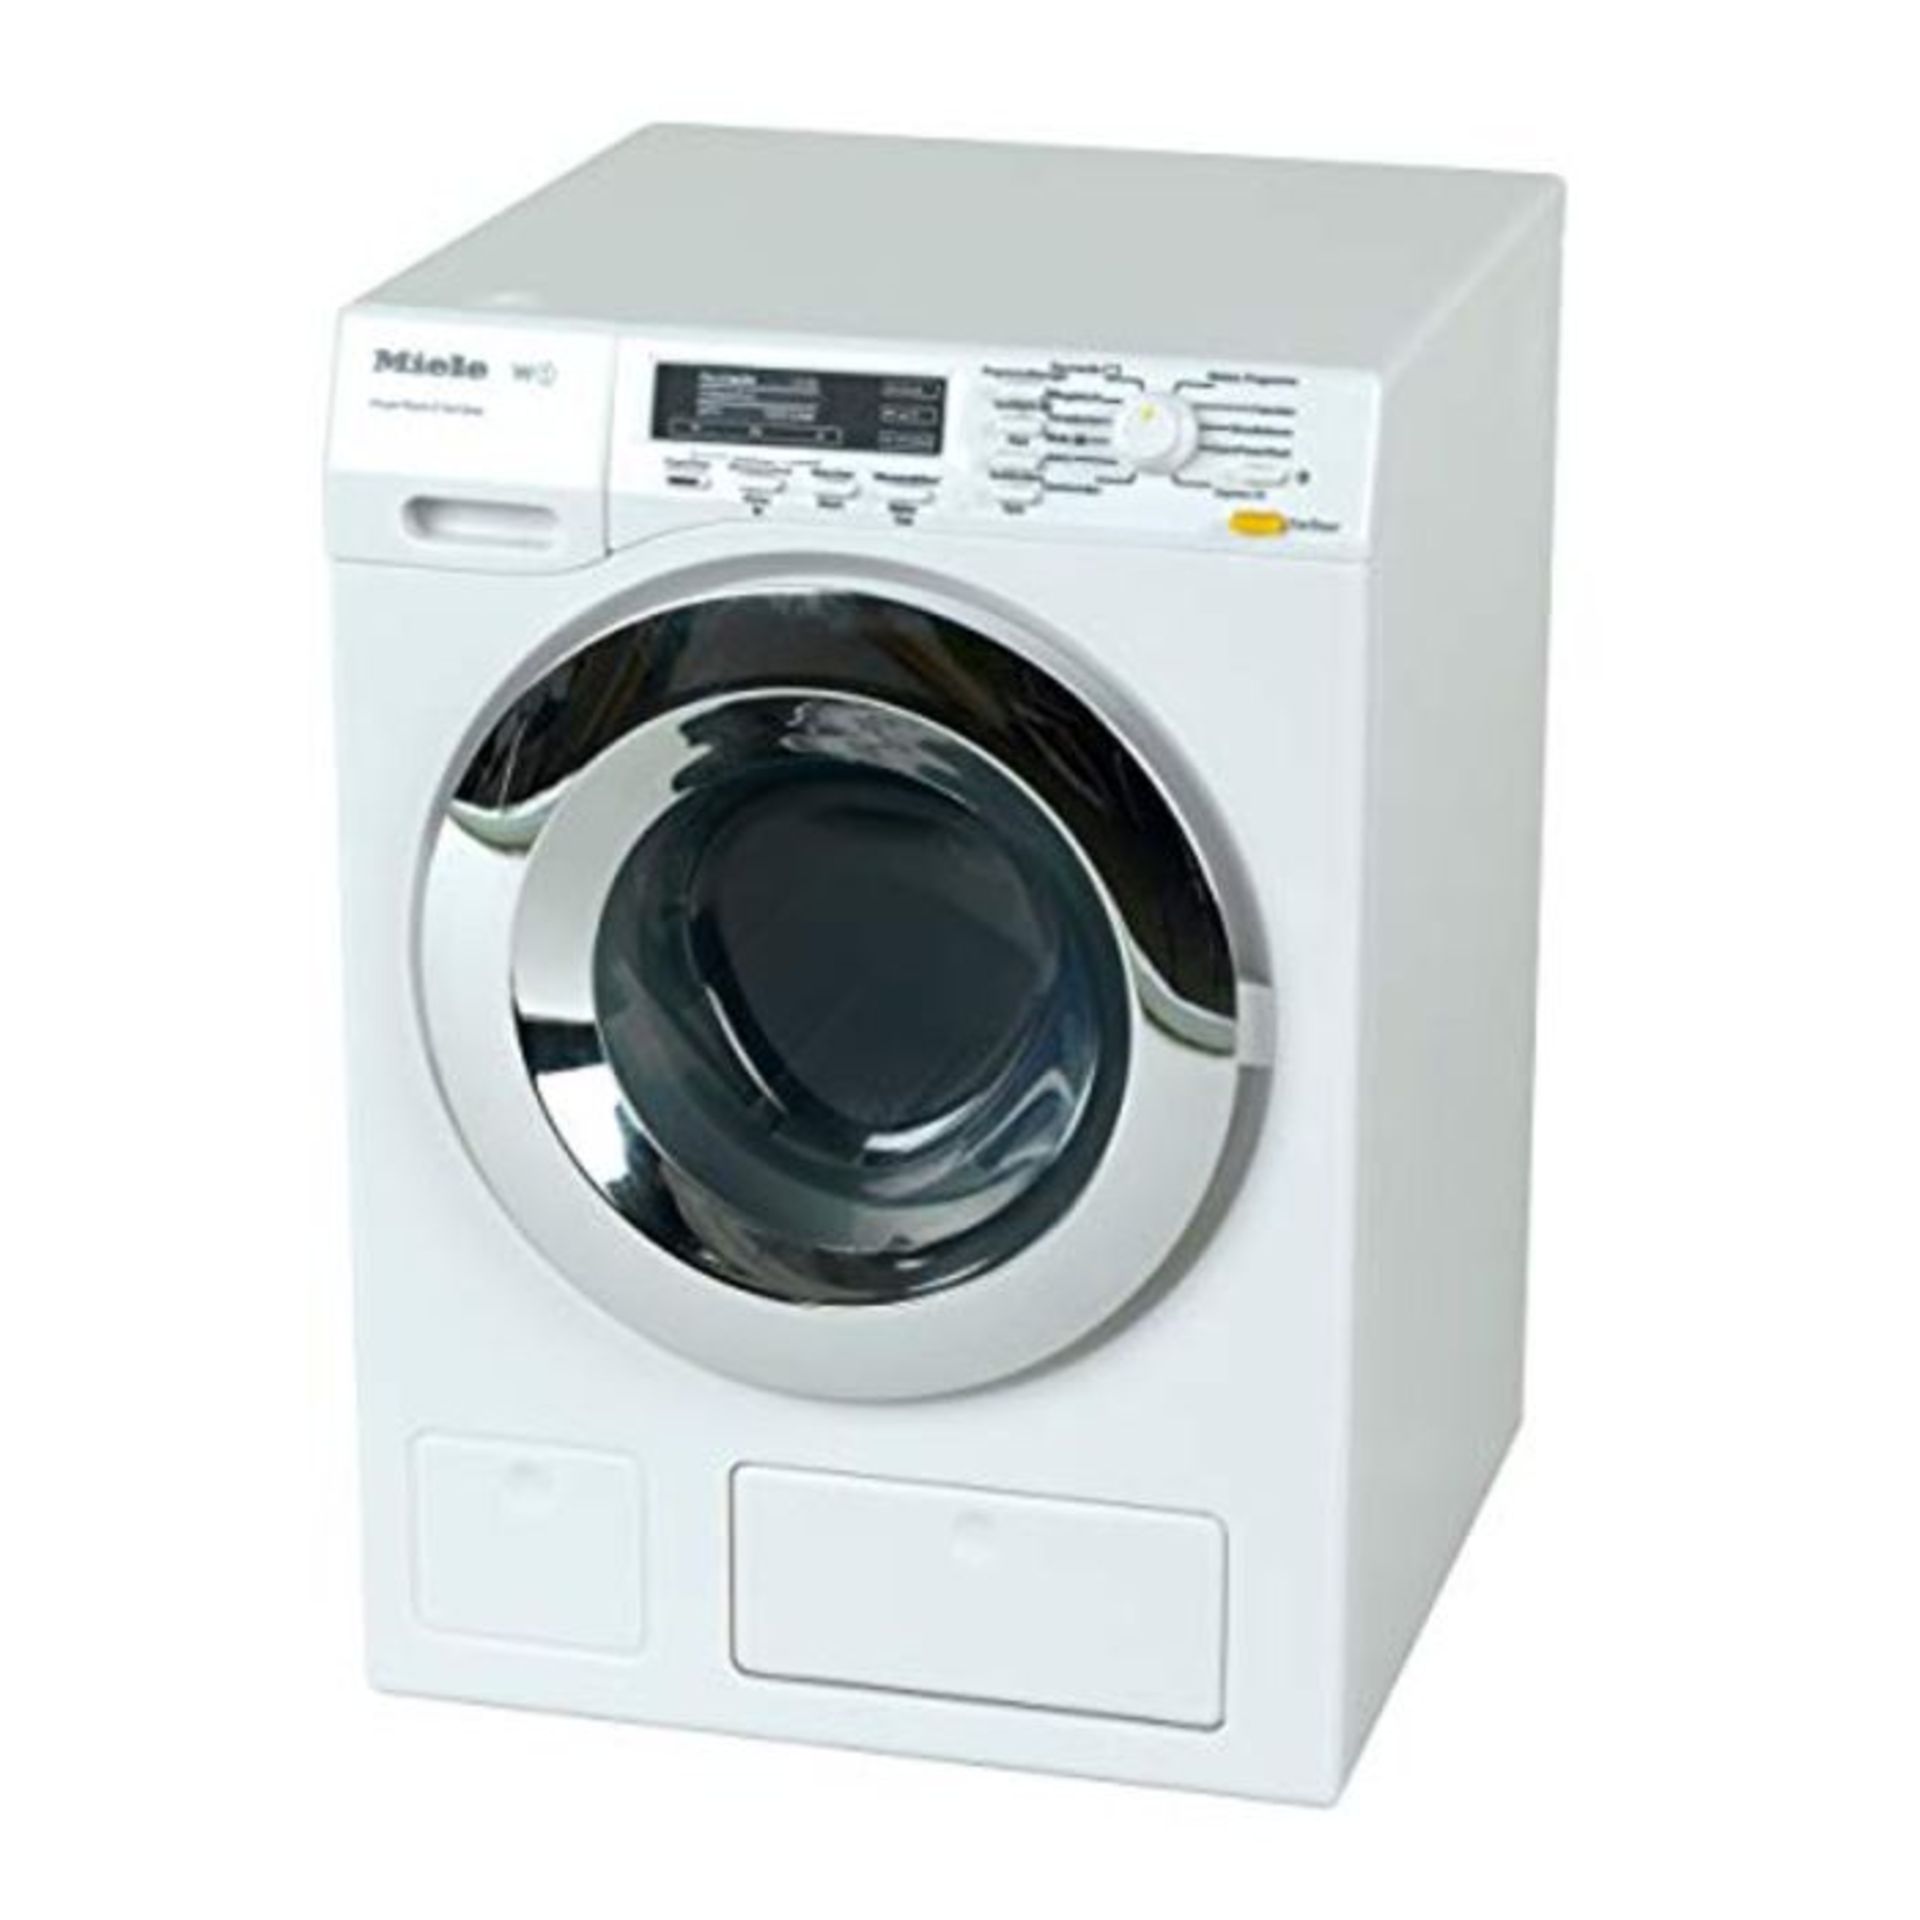 Theo Klein 6941 Miele Washing Machine I Four Washing Programmes and Original Sounds I